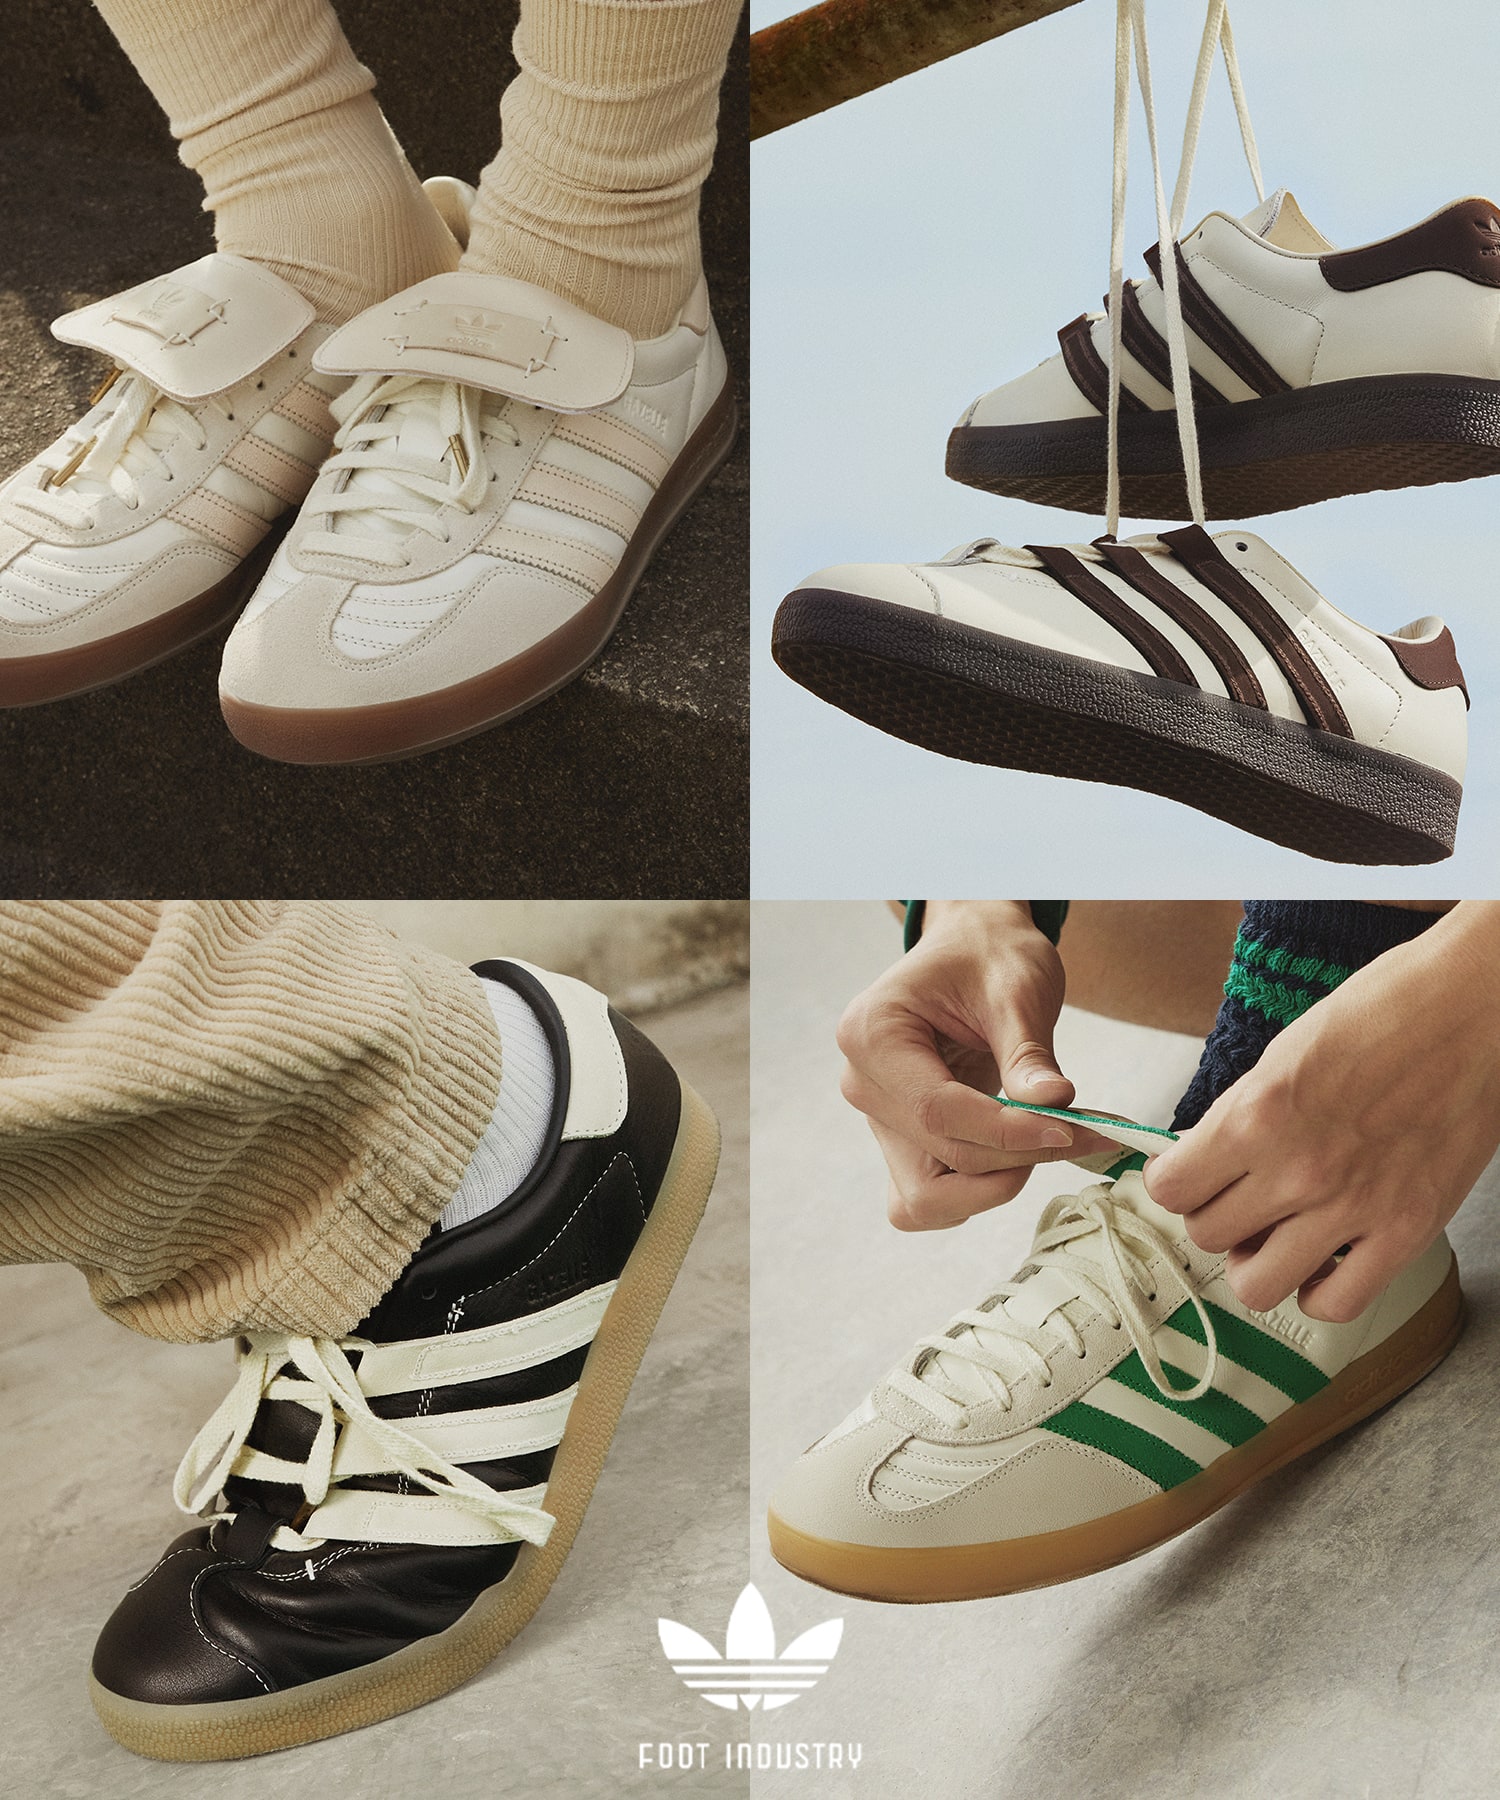 adidas Originals x FOOT INDUSTRY GAZELLE